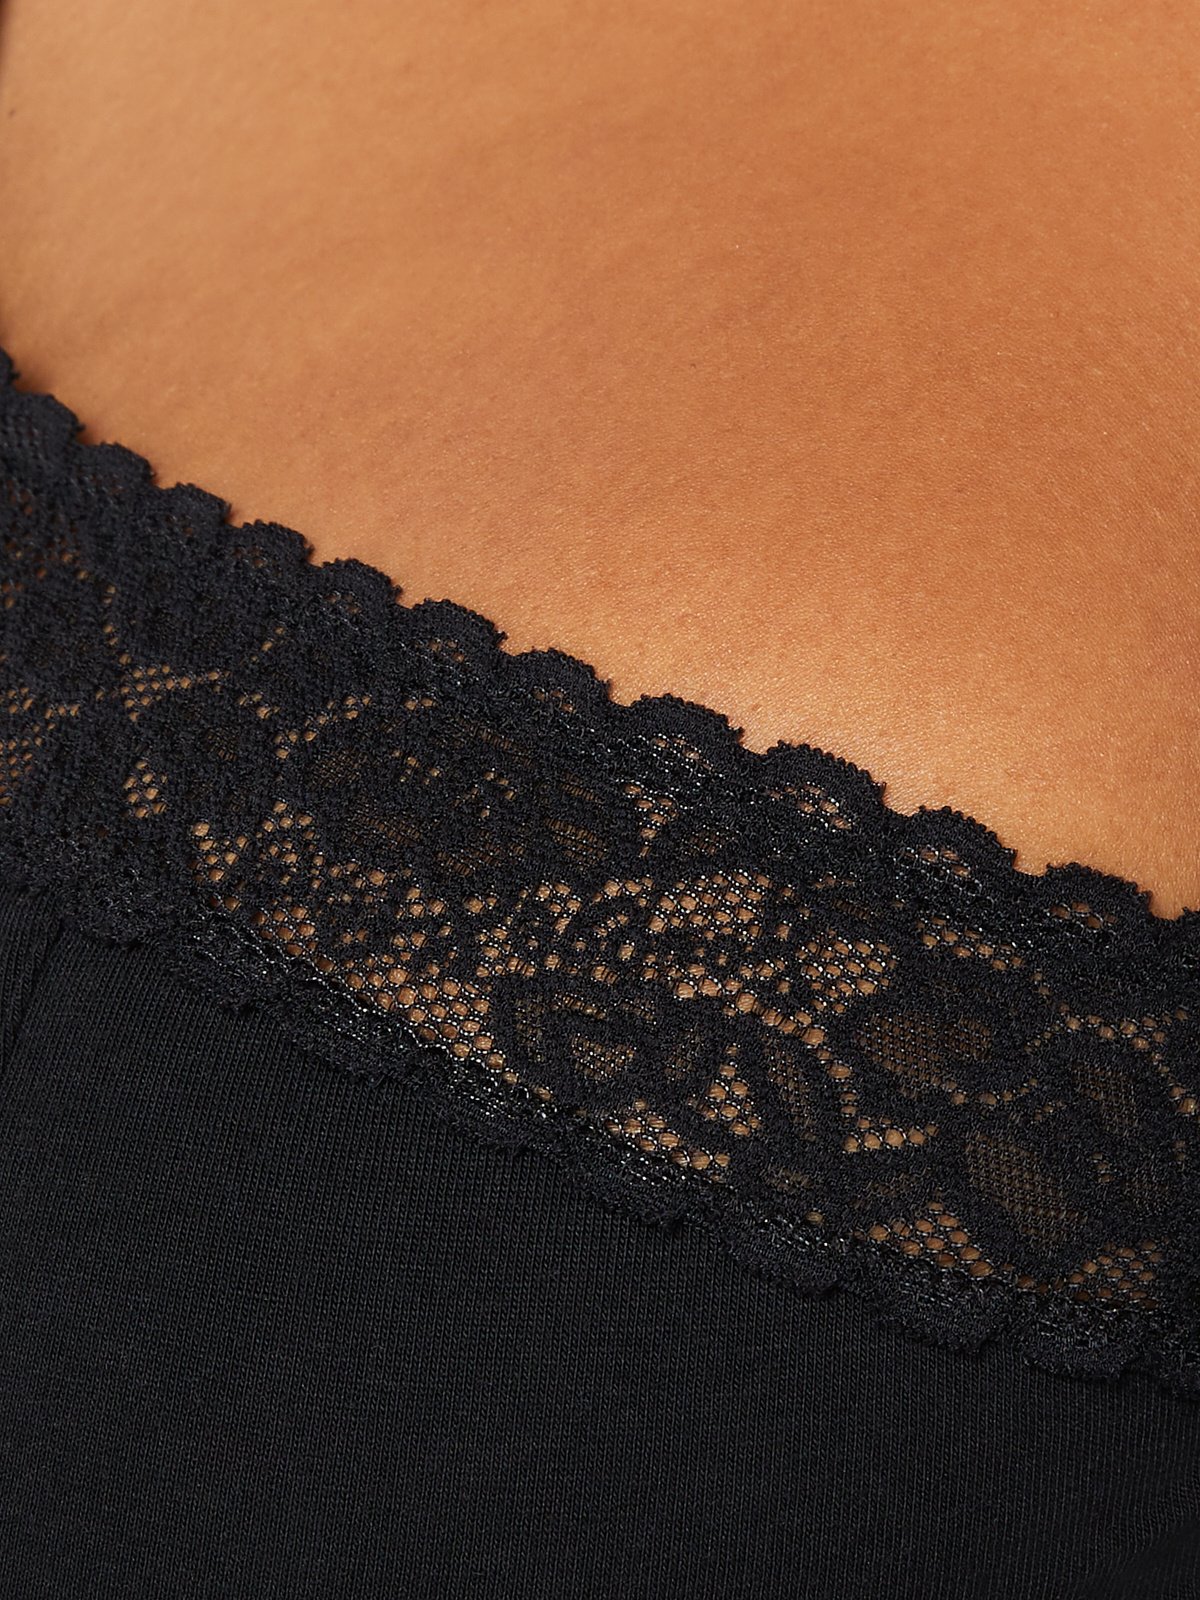 Cotton Essentials Lace-Trim Unlined Bra in Black